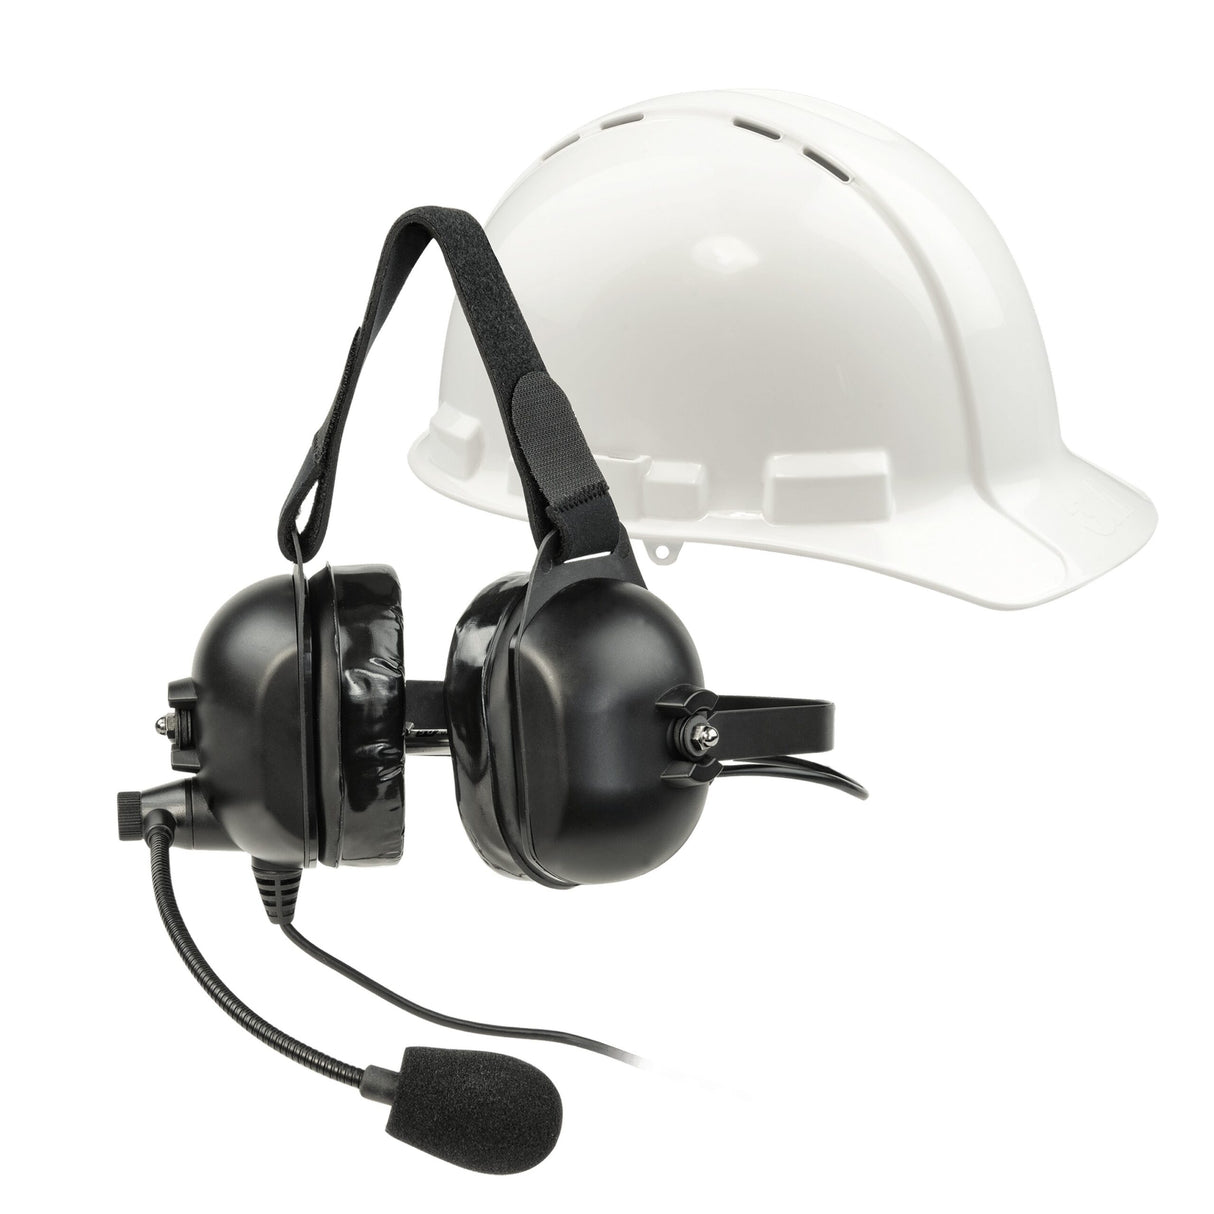 Listen Tech LA-455 Overhead Dual Ear Industrial Headset with Boom Microphone